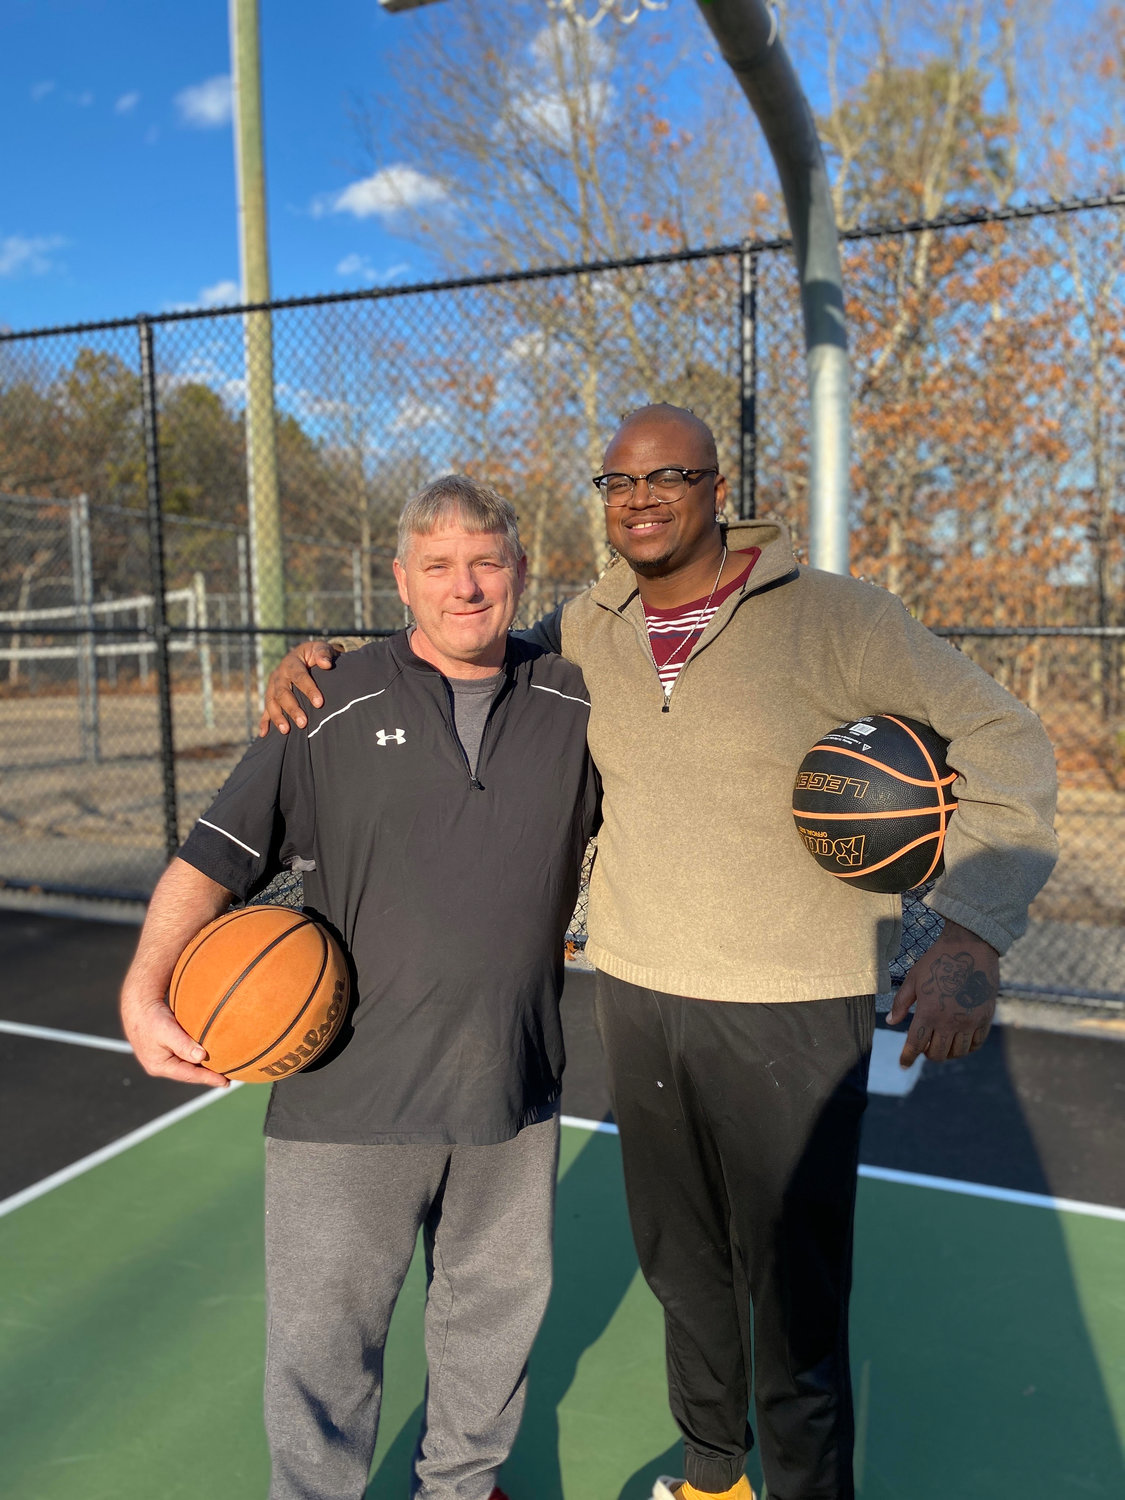 Friends Ron Turner and Jordan Walker enjoy the refurbished basketball court on a recent afternoon.